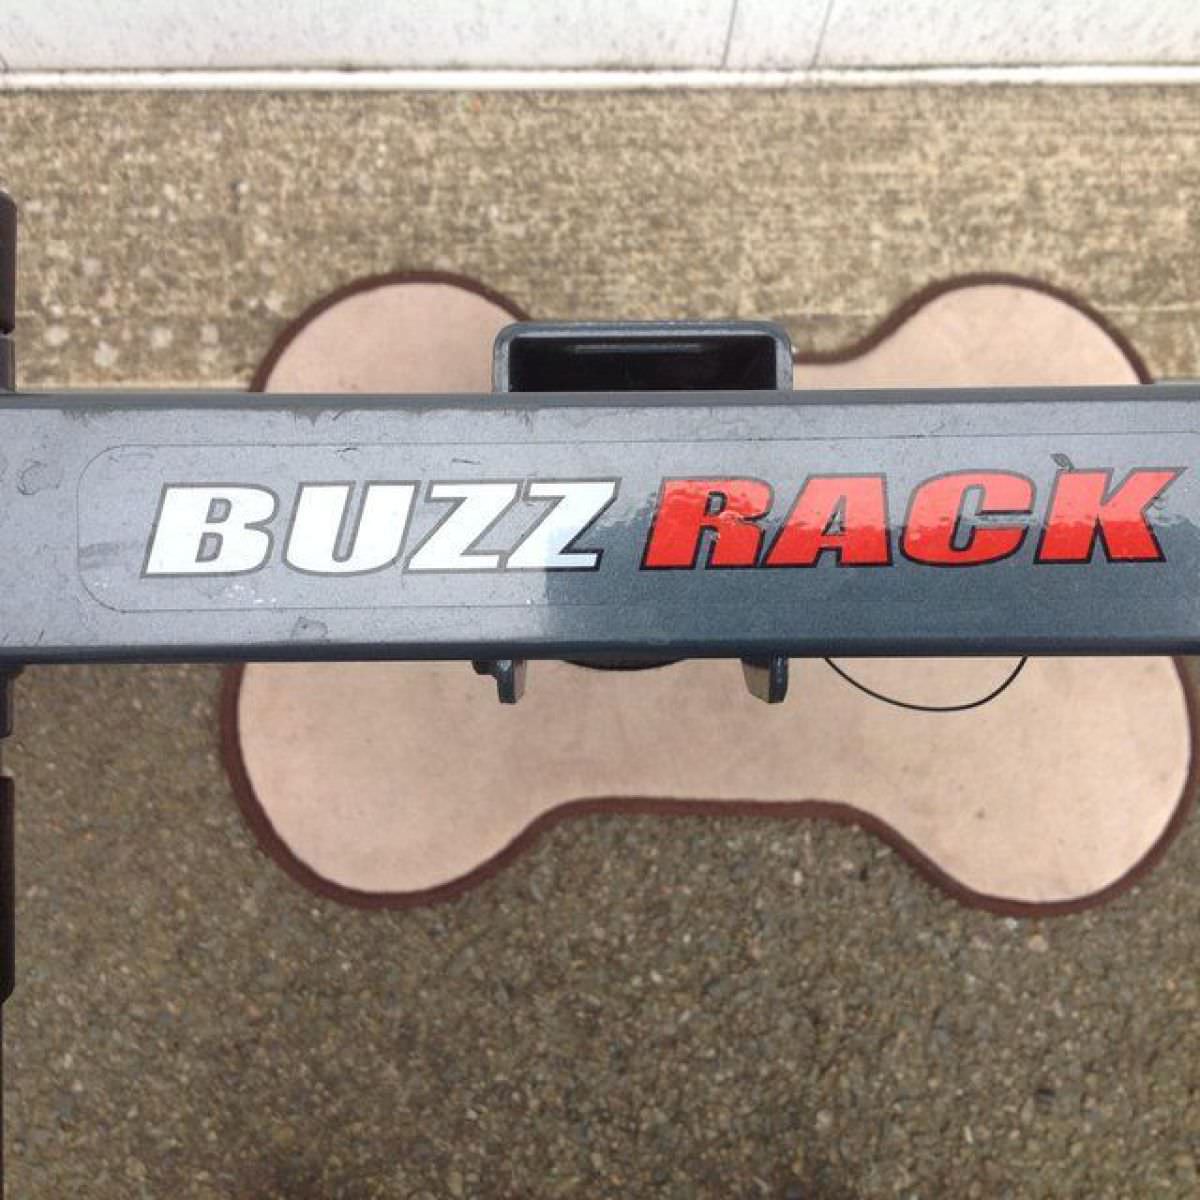 Buzz rack 3 bike carrier